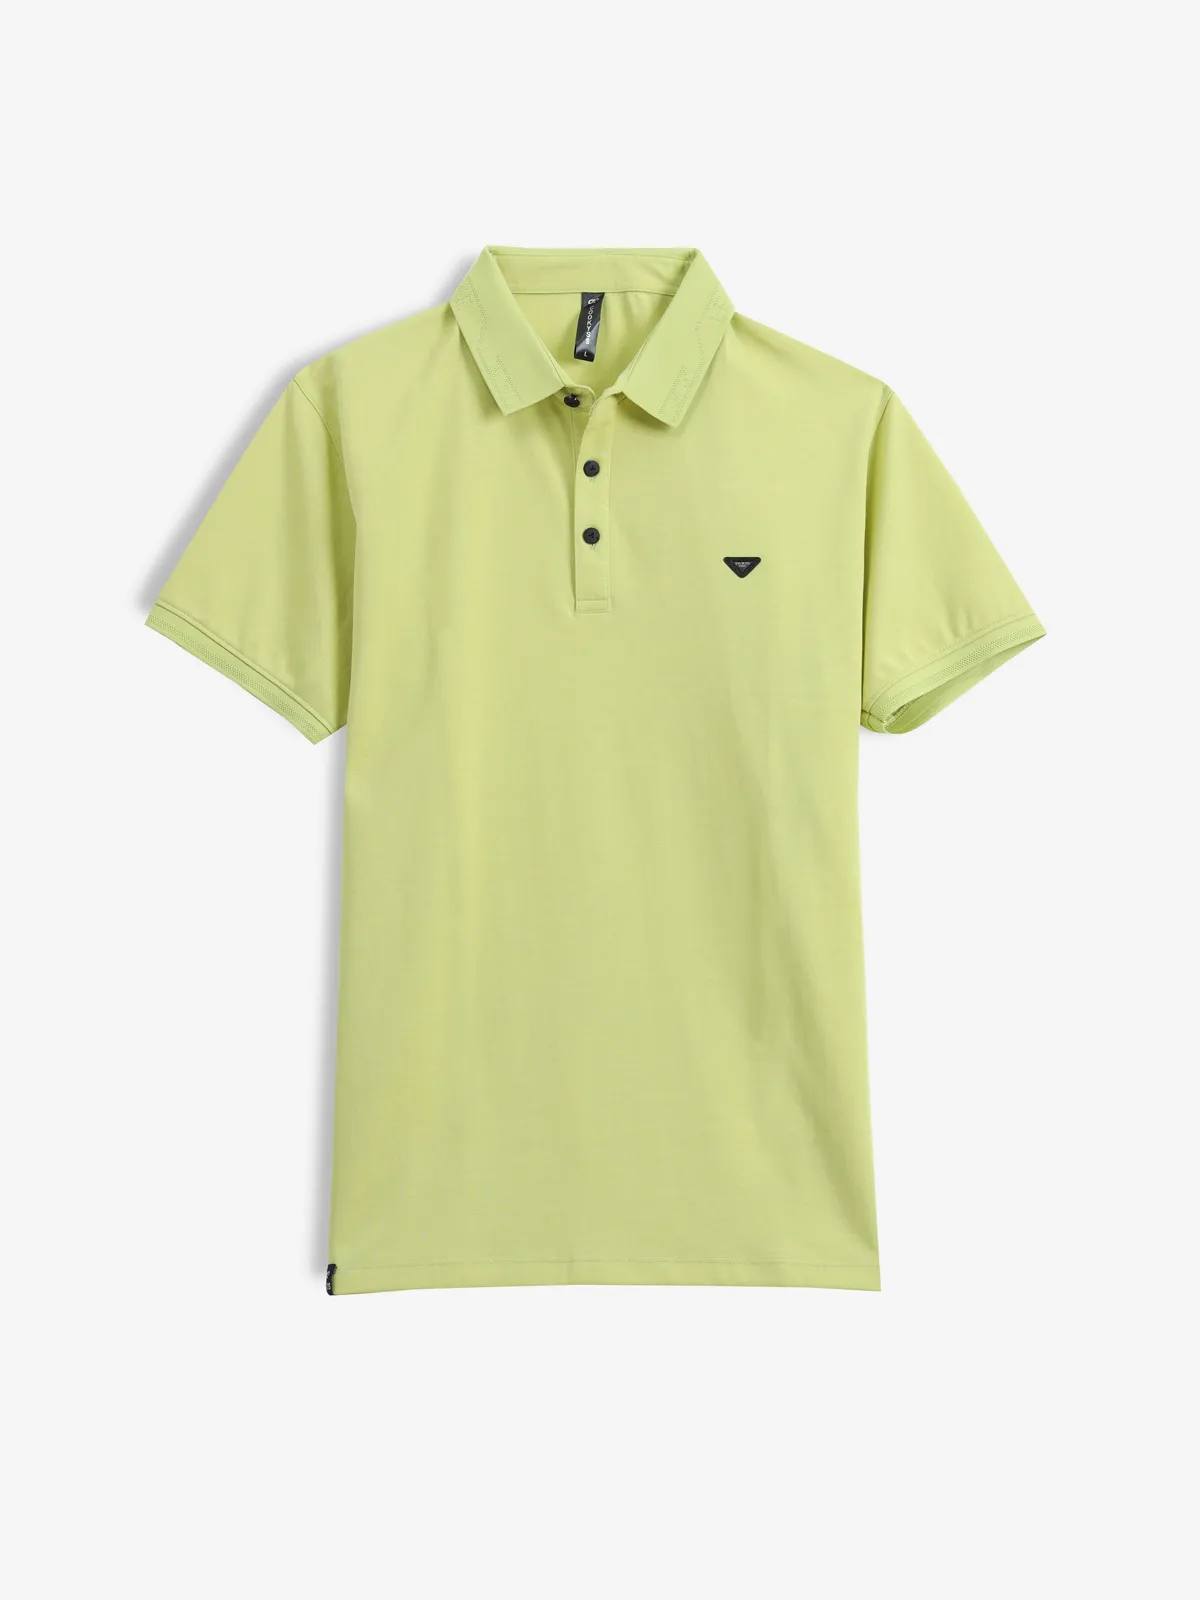 COOKYSS plain green polo t-shirt